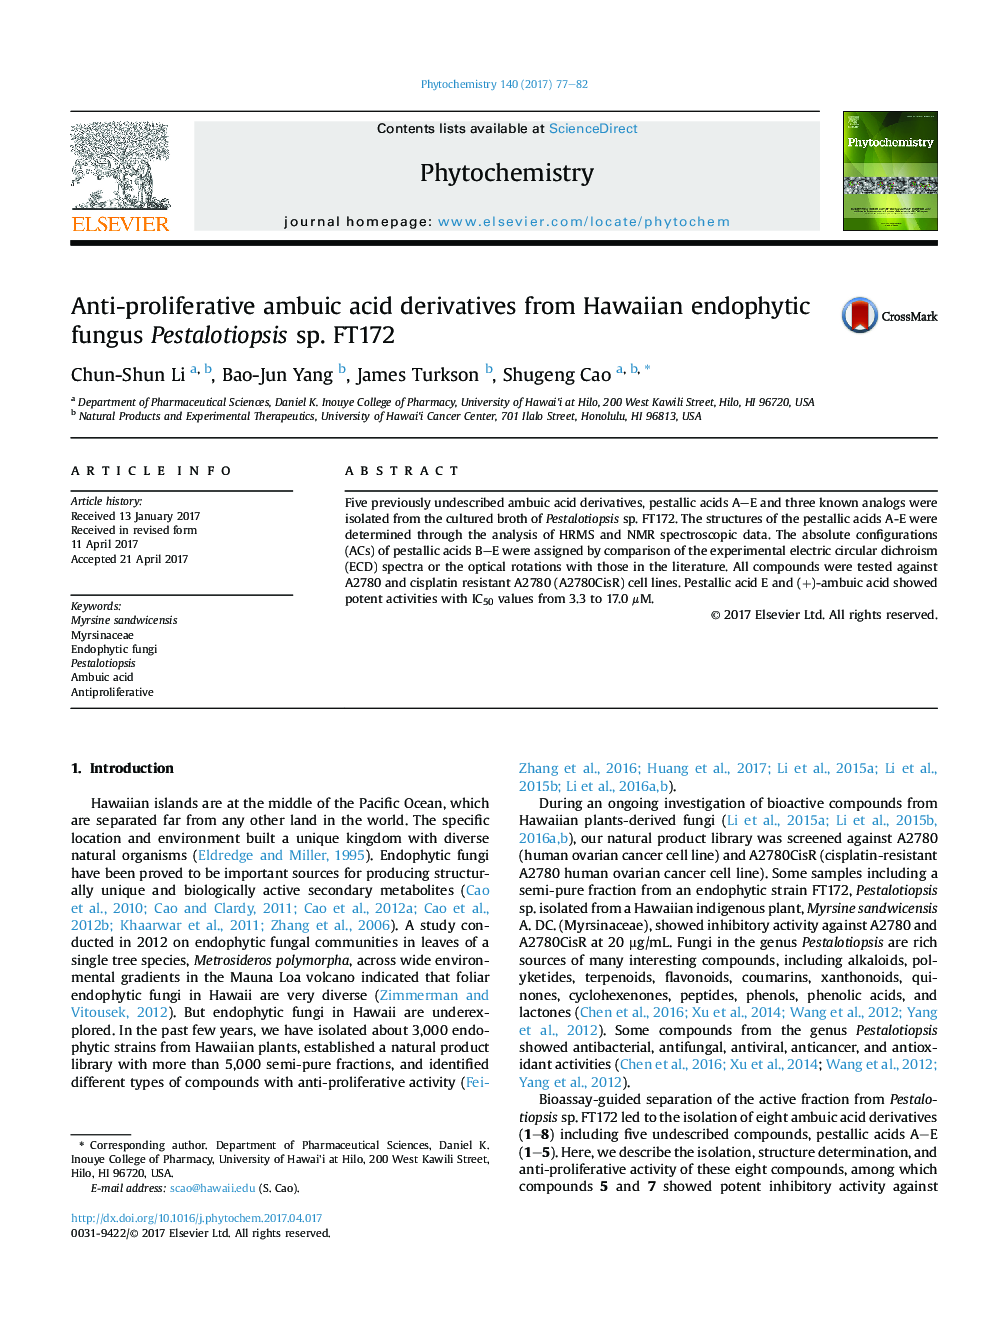 Anti-proliferative ambuic acid derivatives from Hawaiian endophytic fungus Pestalotiopsis sp. FT172